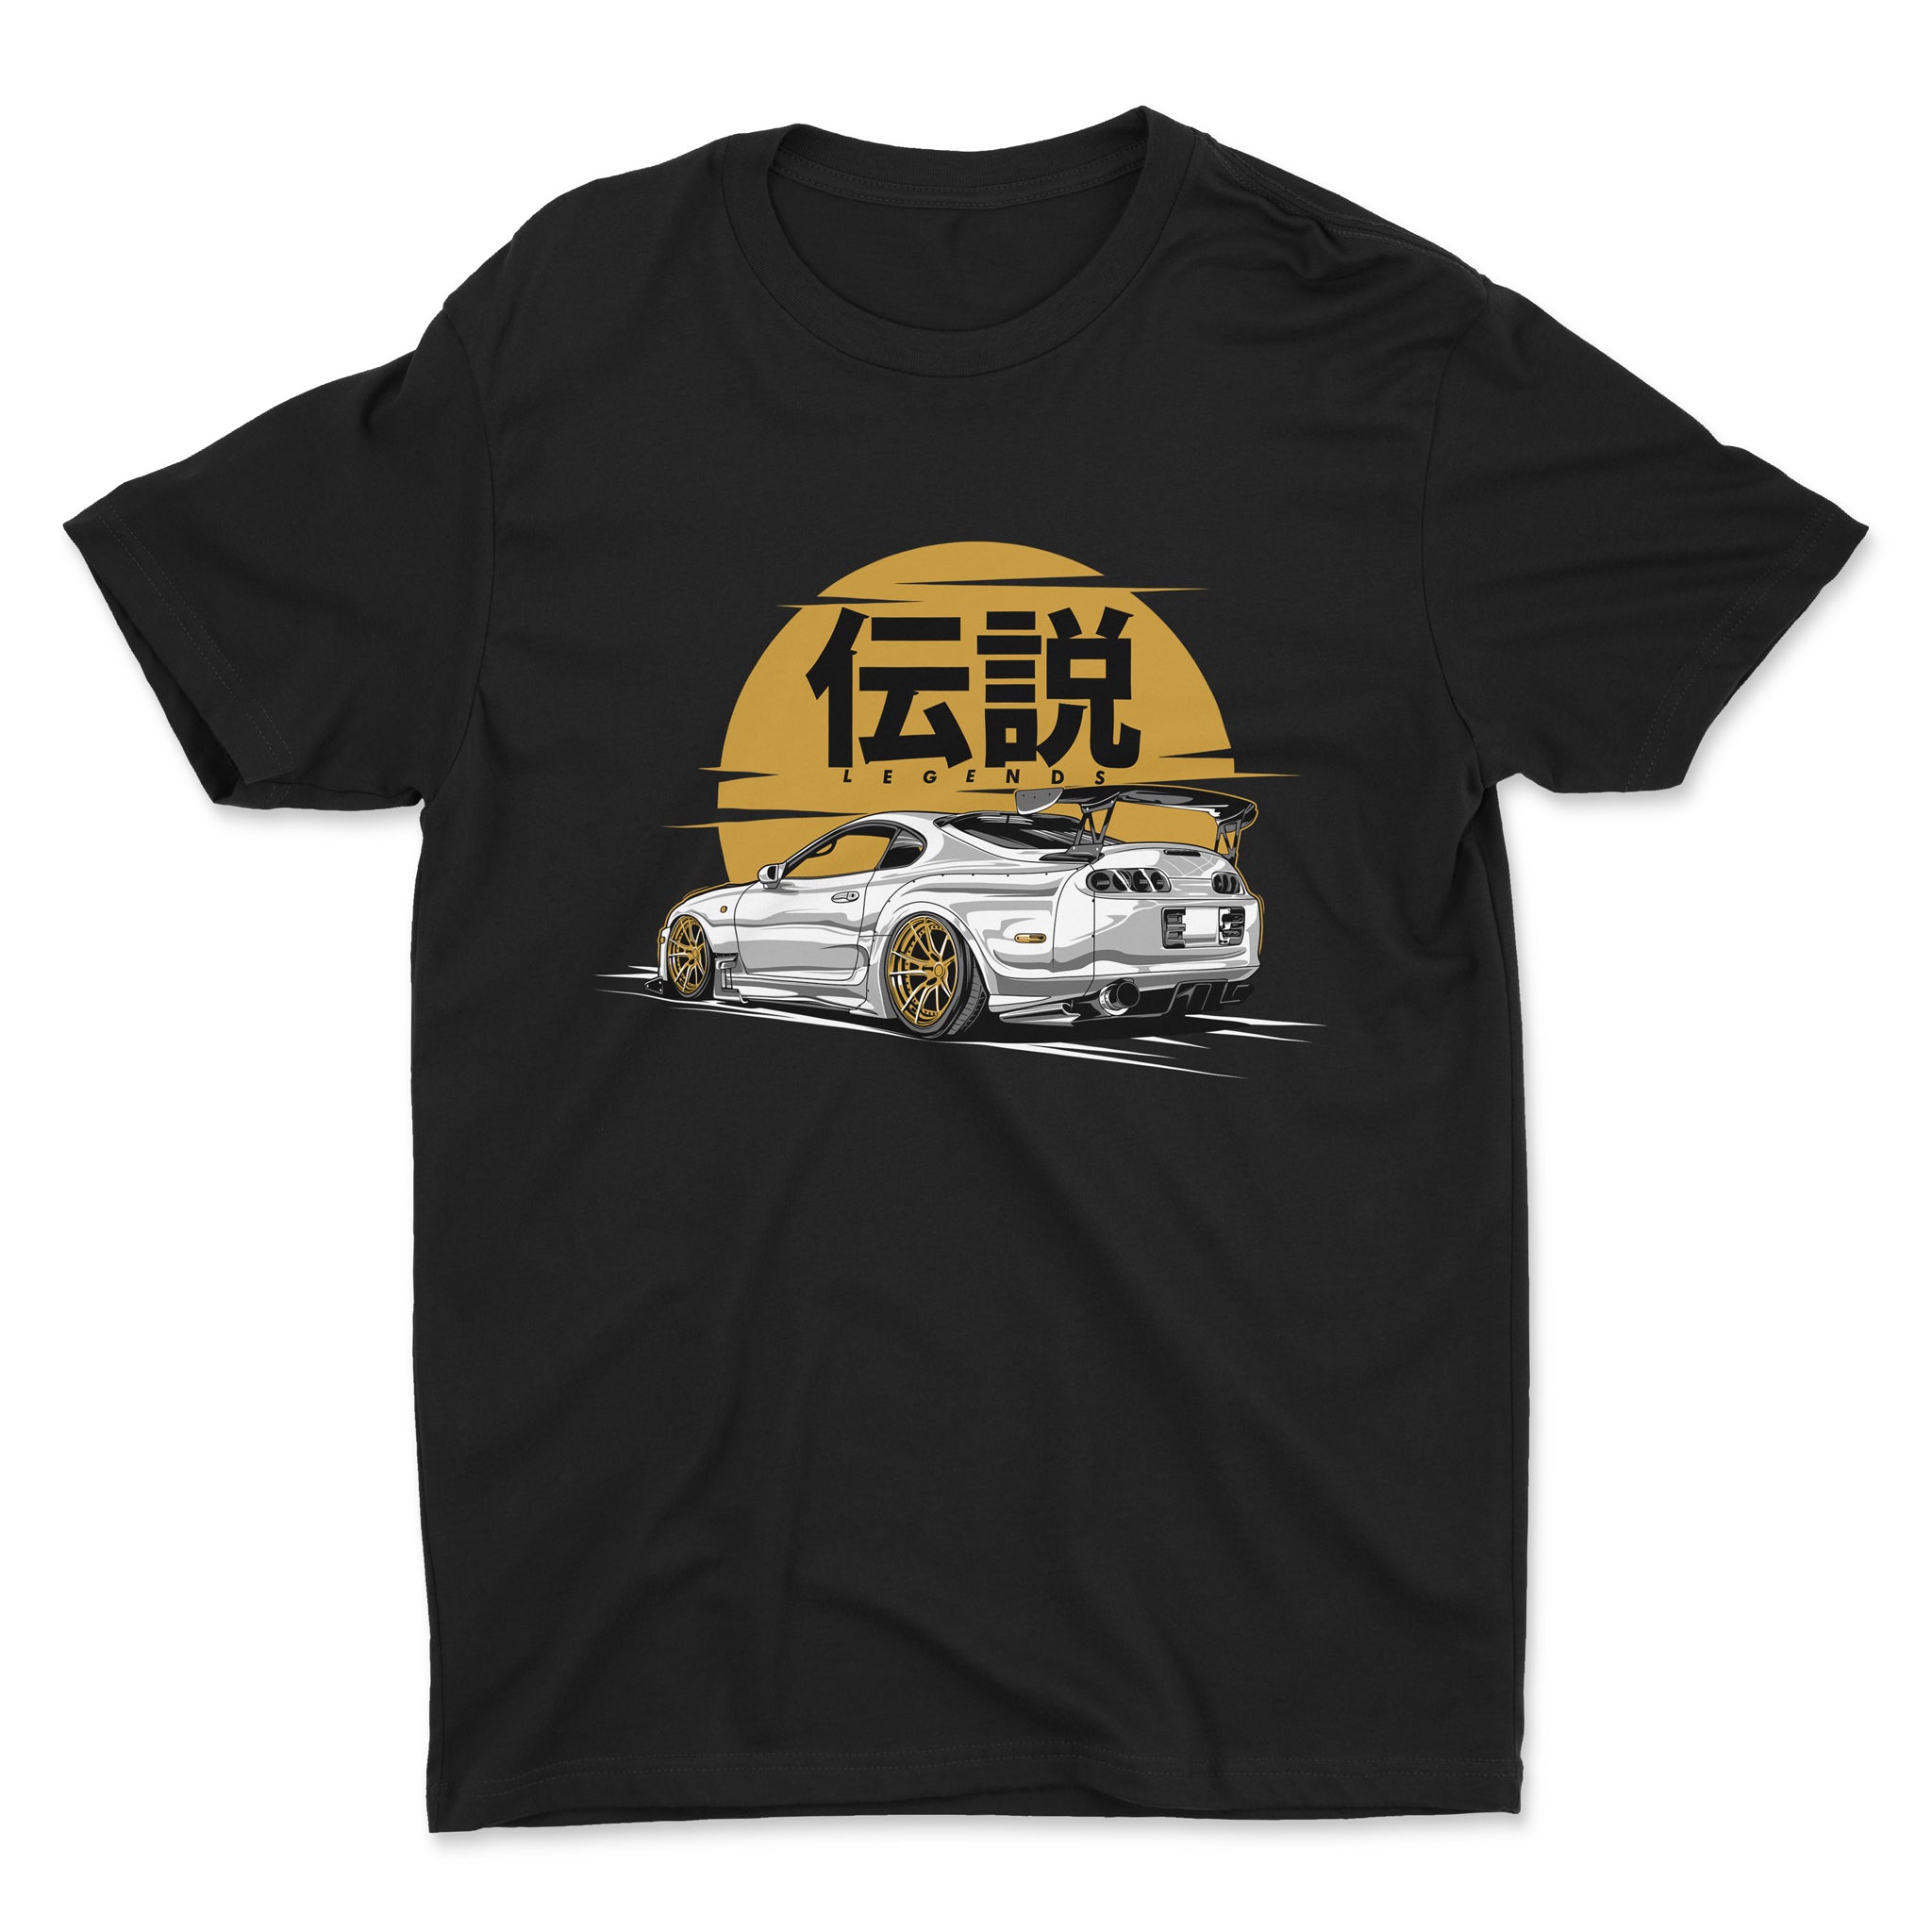 Toyota Supra MKIV Legend Car T-Shirt in black.